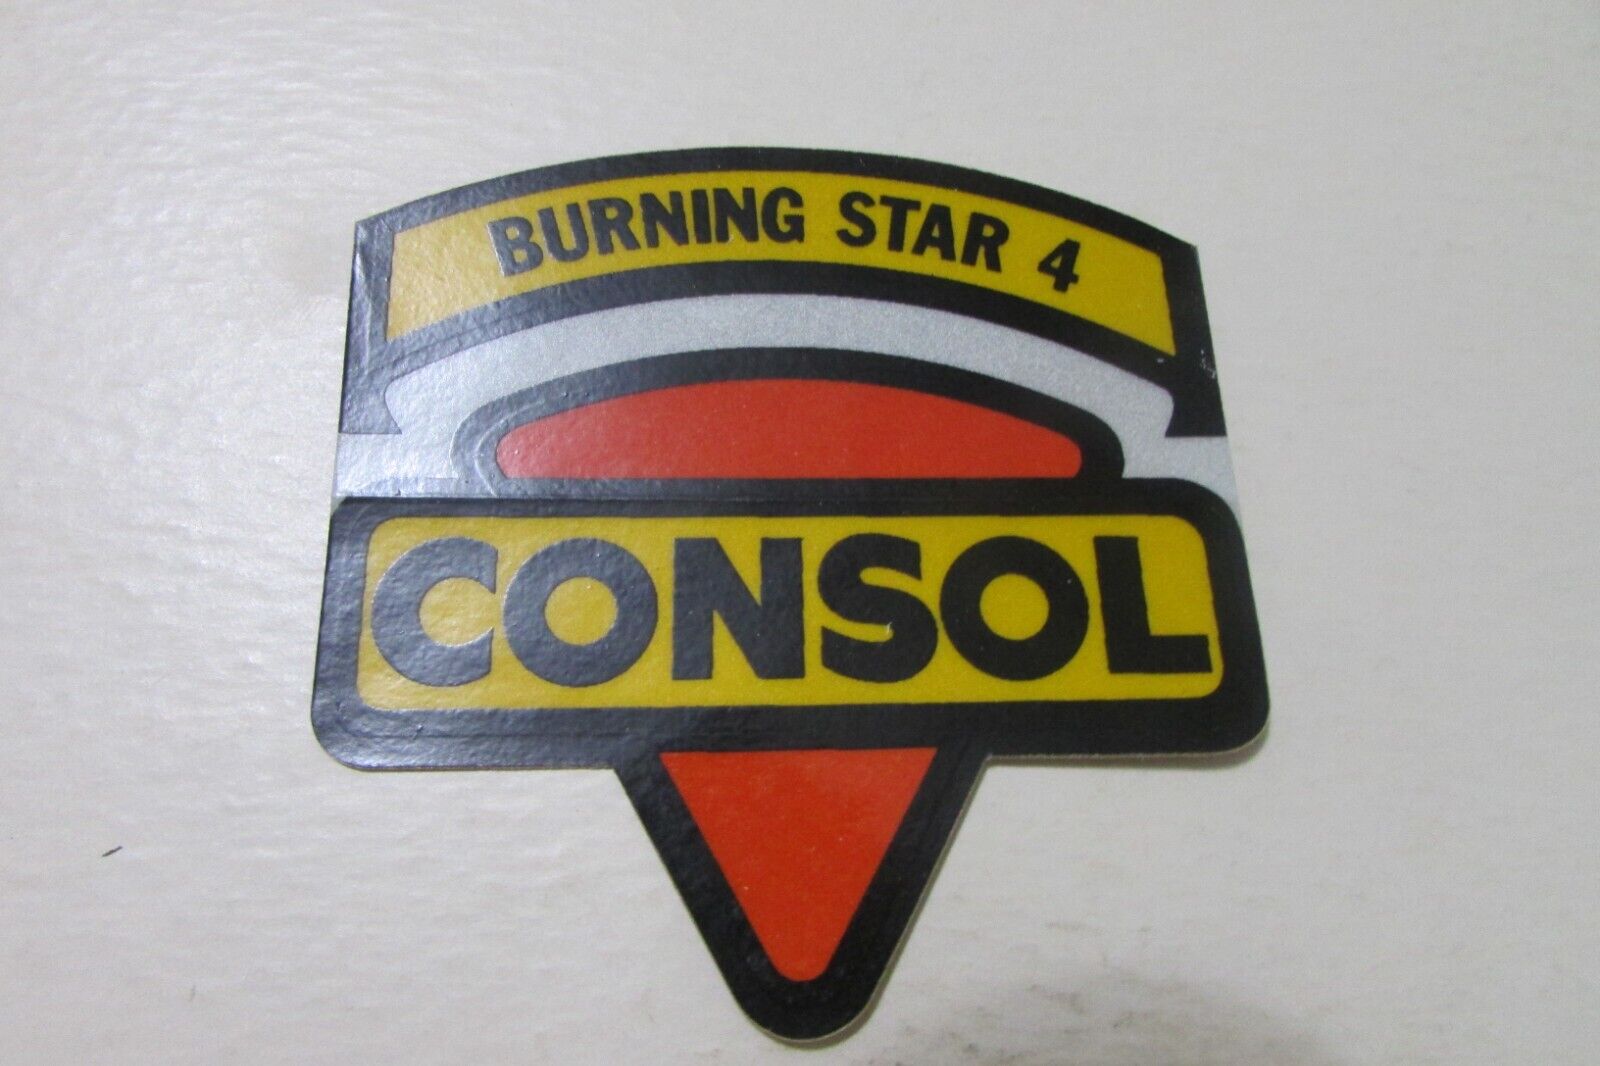 1ST PRINTING CONSOL BURNING STAR 4 SHIELD CONSOL COAL MINING STICKER